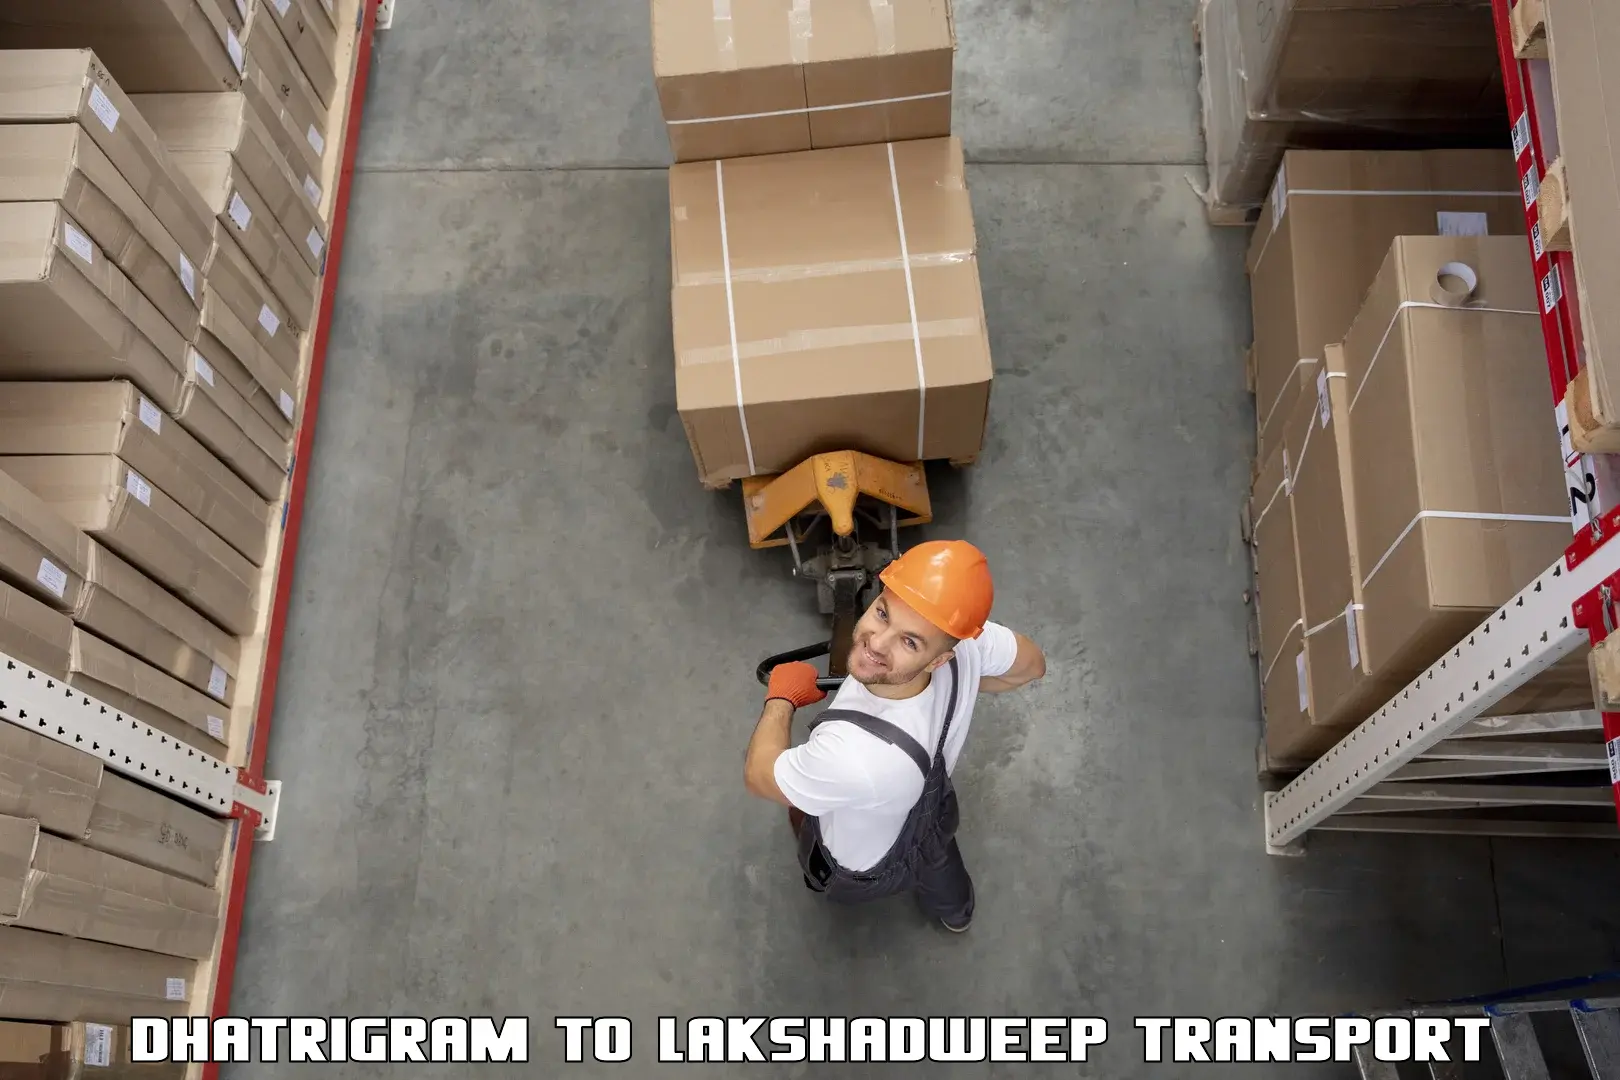 Pick up transport service Dhatrigram to Lakshadweep